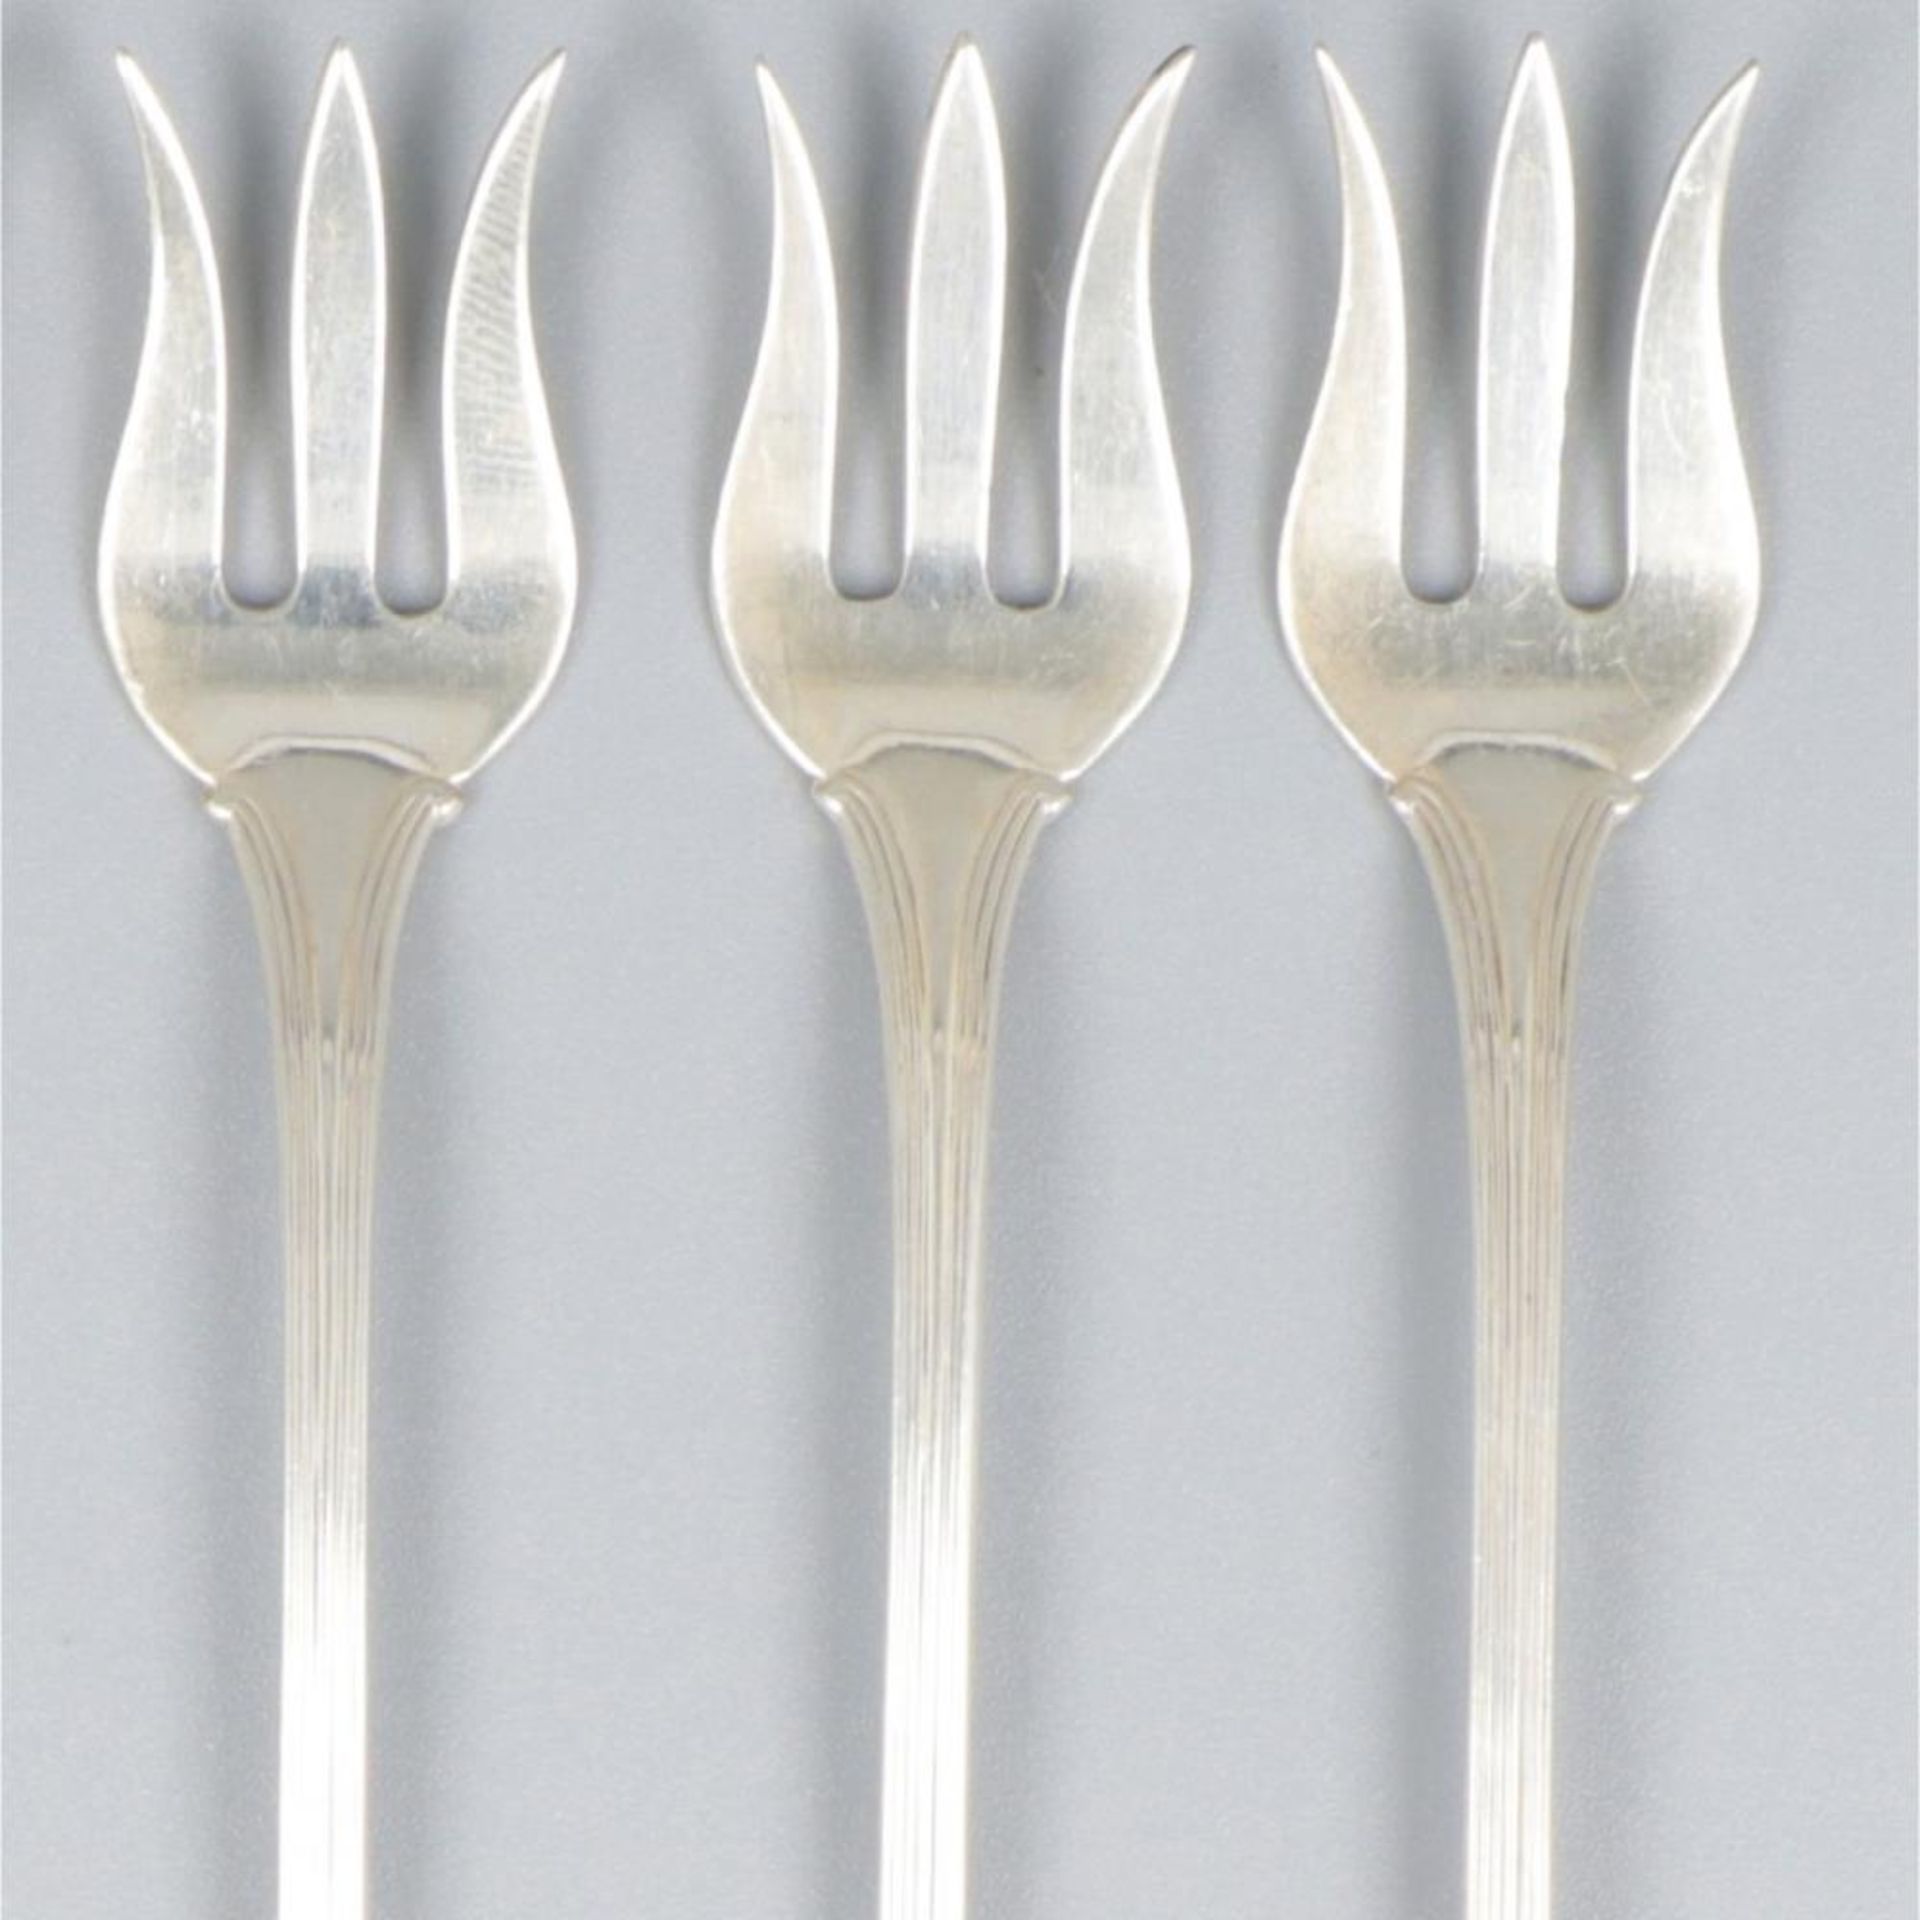 6-piece set of fruit forks silver. - Image 4 of 7